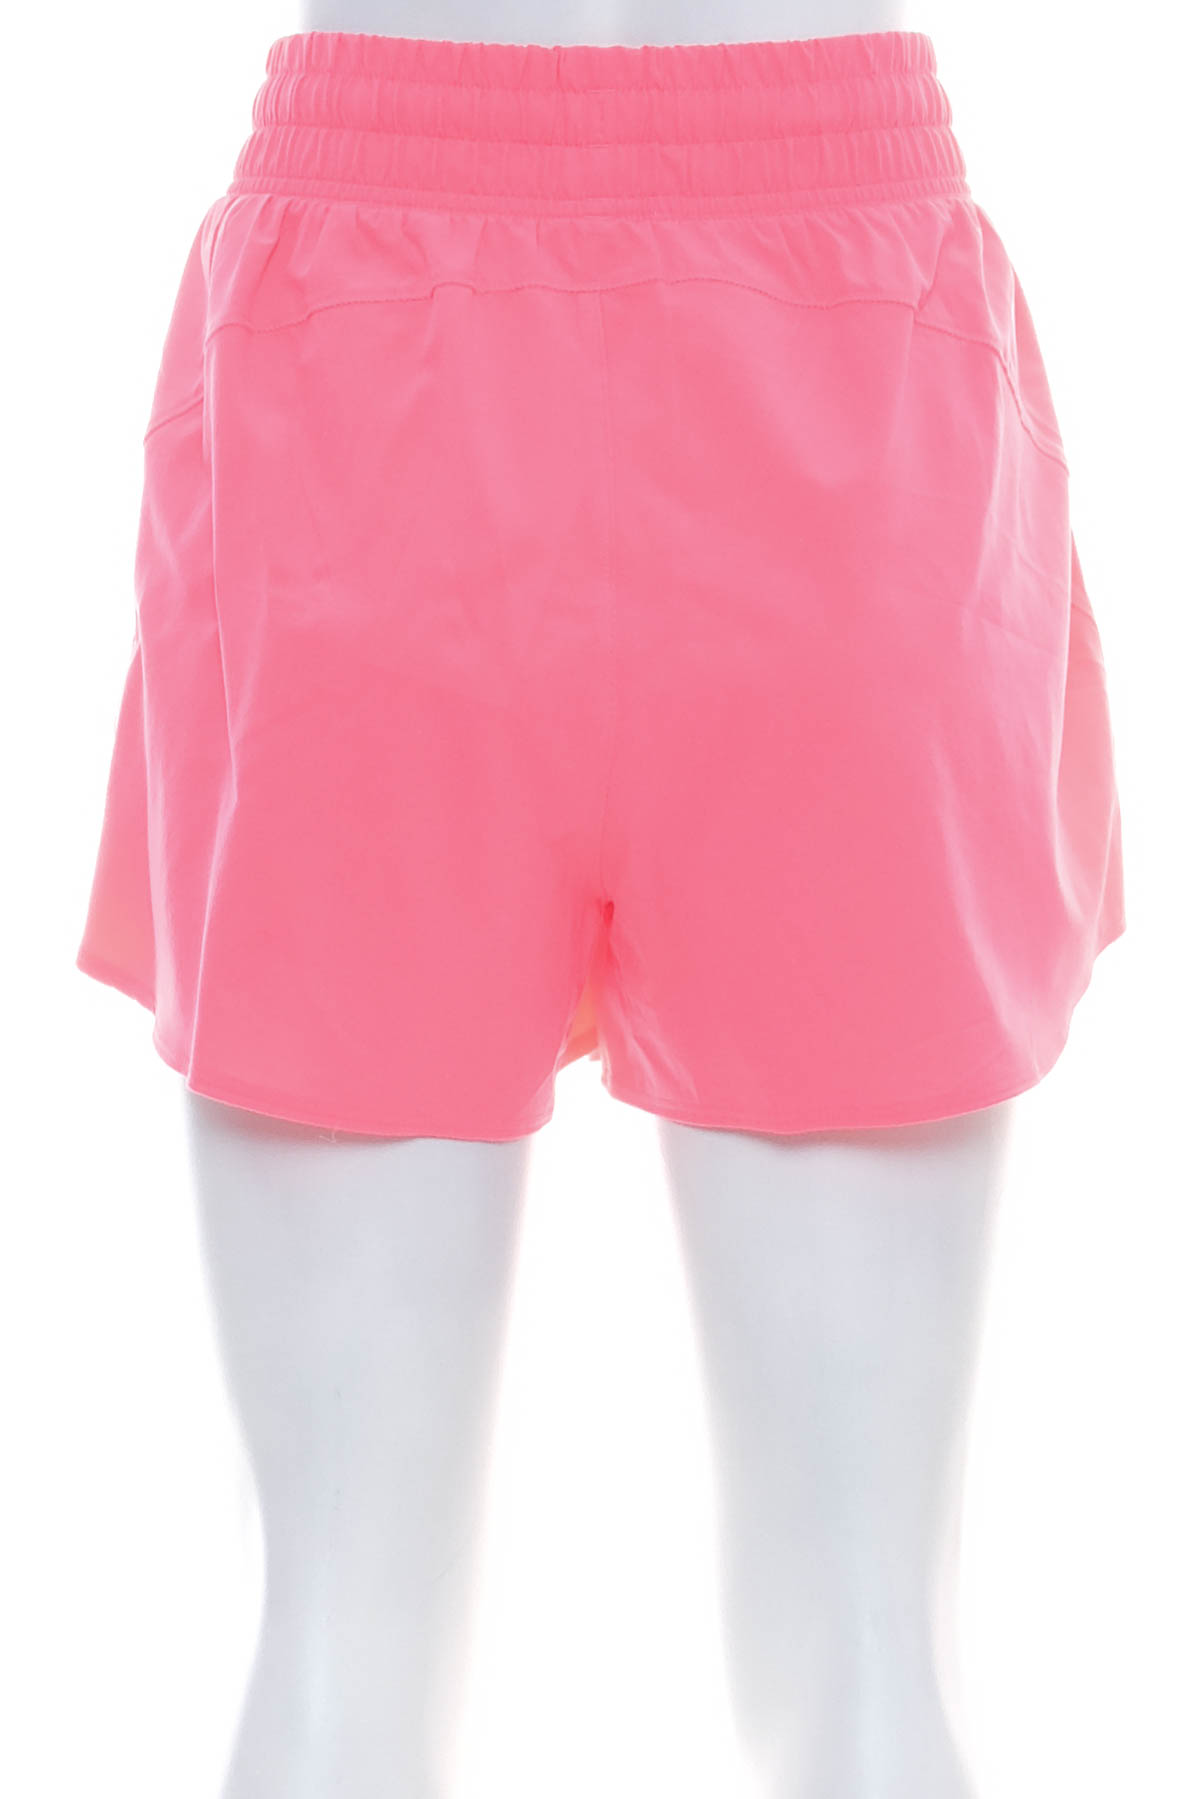 Female shorts - UNDER ARMOUR - 1